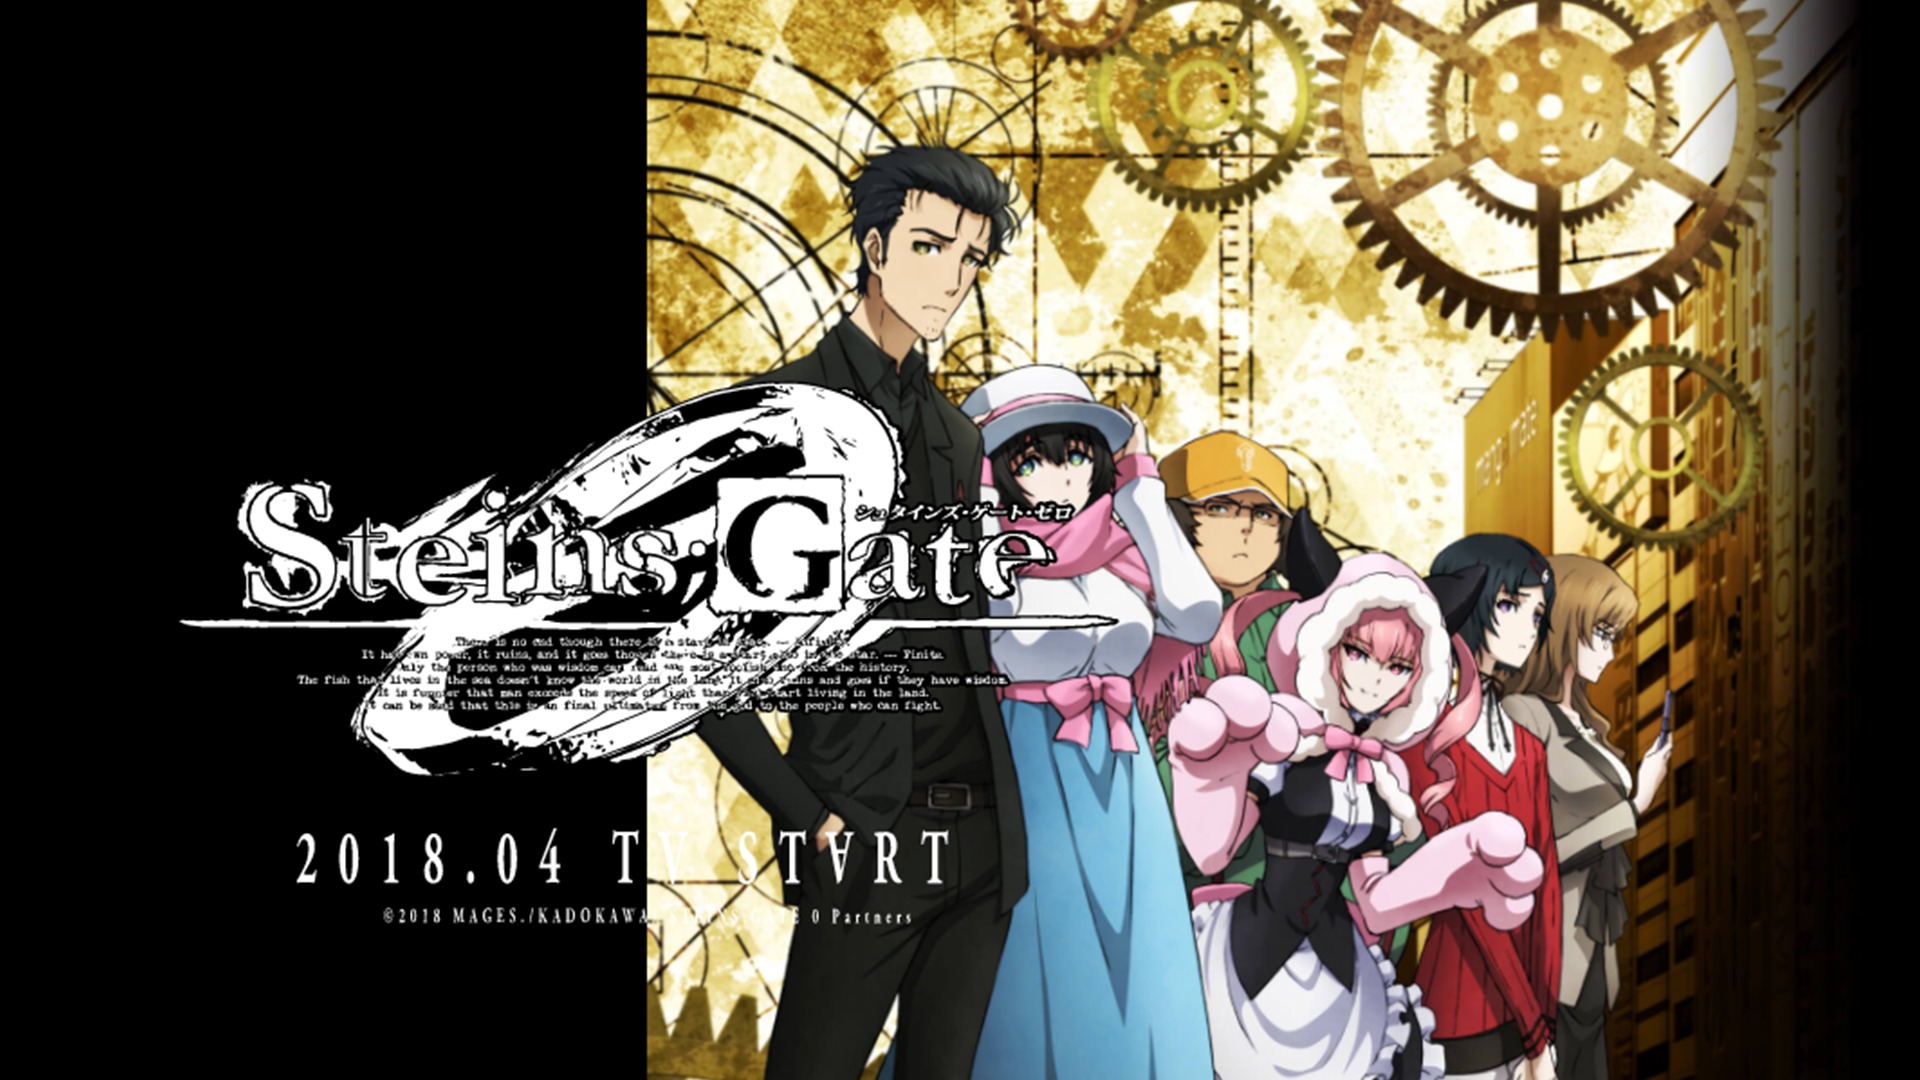 Japanese Website Lists Steins Gate 0 Anime With 23 Episodes And 1 Ova Kiri Kiri Basara